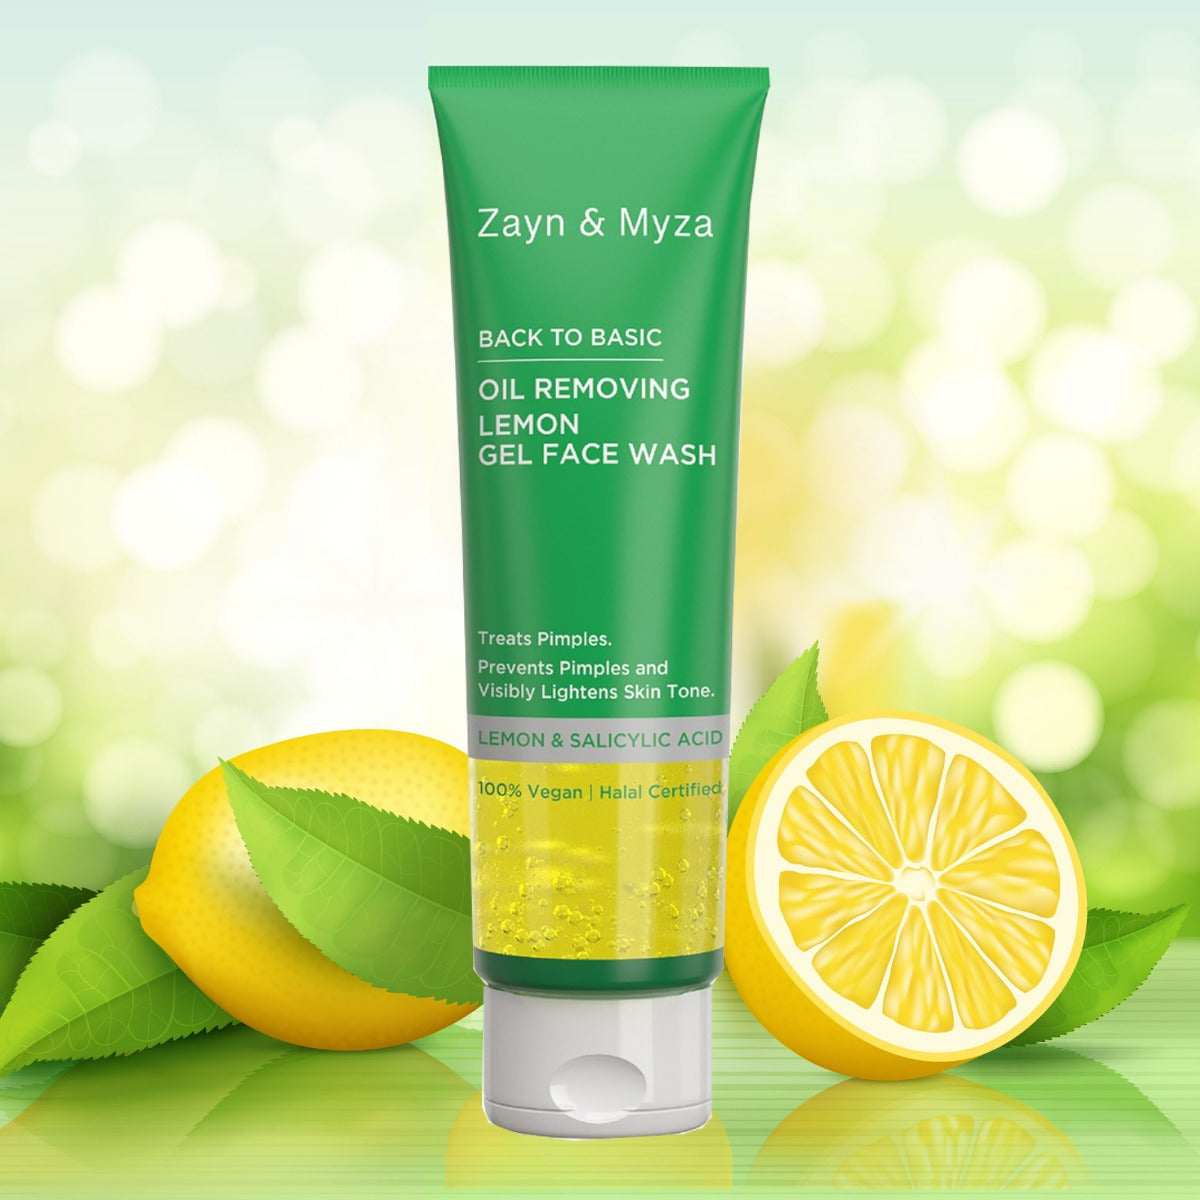 Zayn &amp; Myza Oil Removing Lemon Gel Face Wash (75ml)